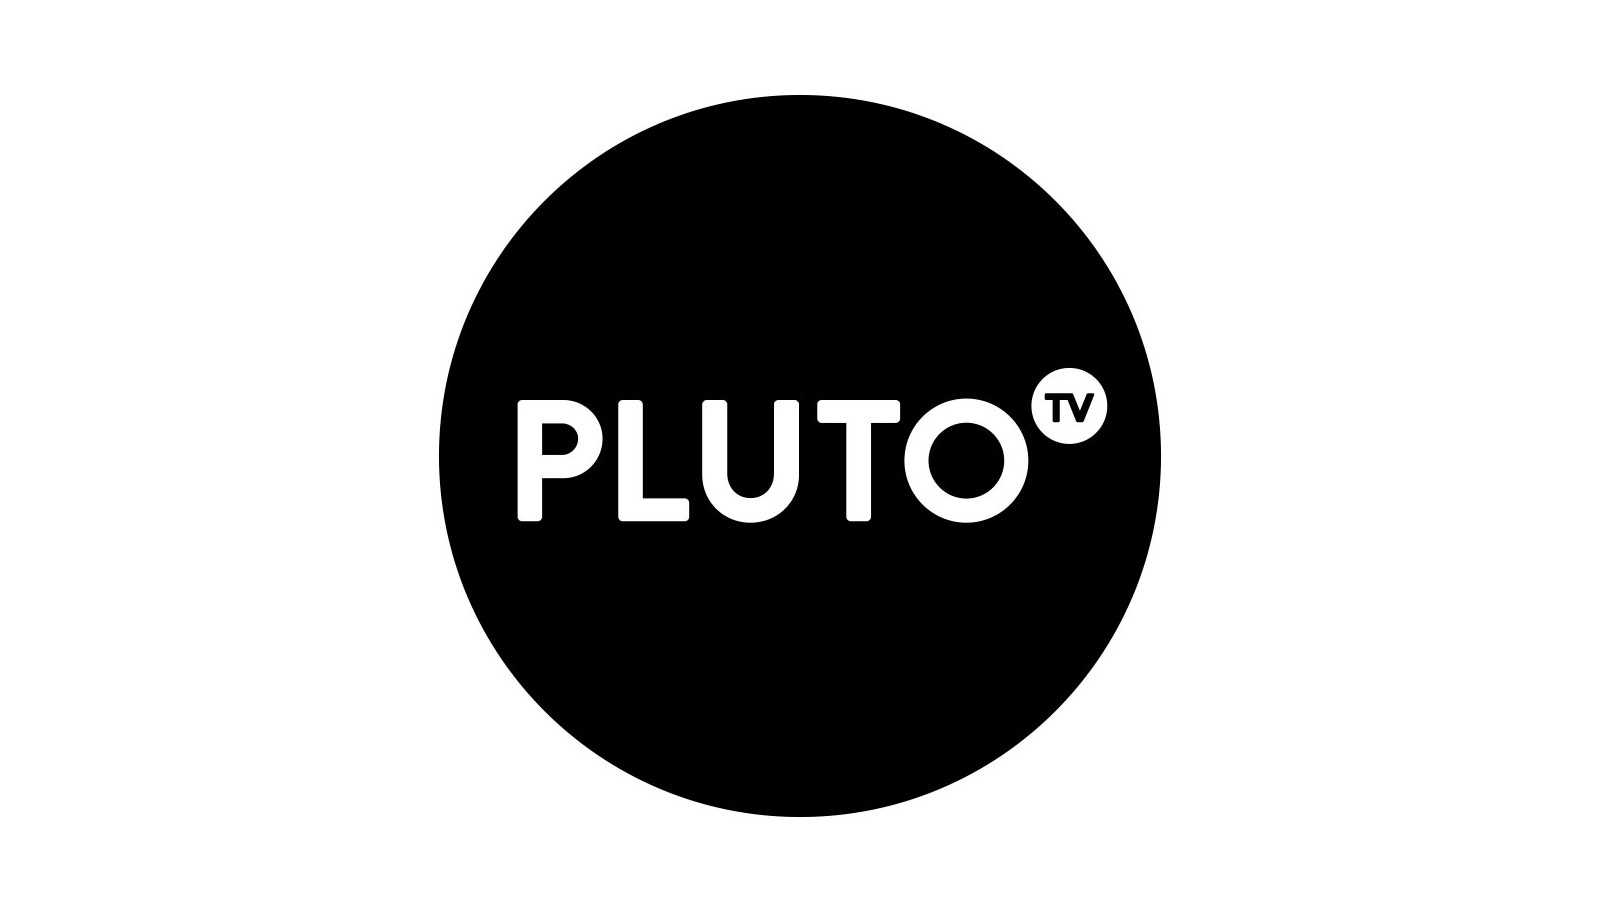 ‘Pluto TV’ User Records Freely Shared on Dark Web Forum...